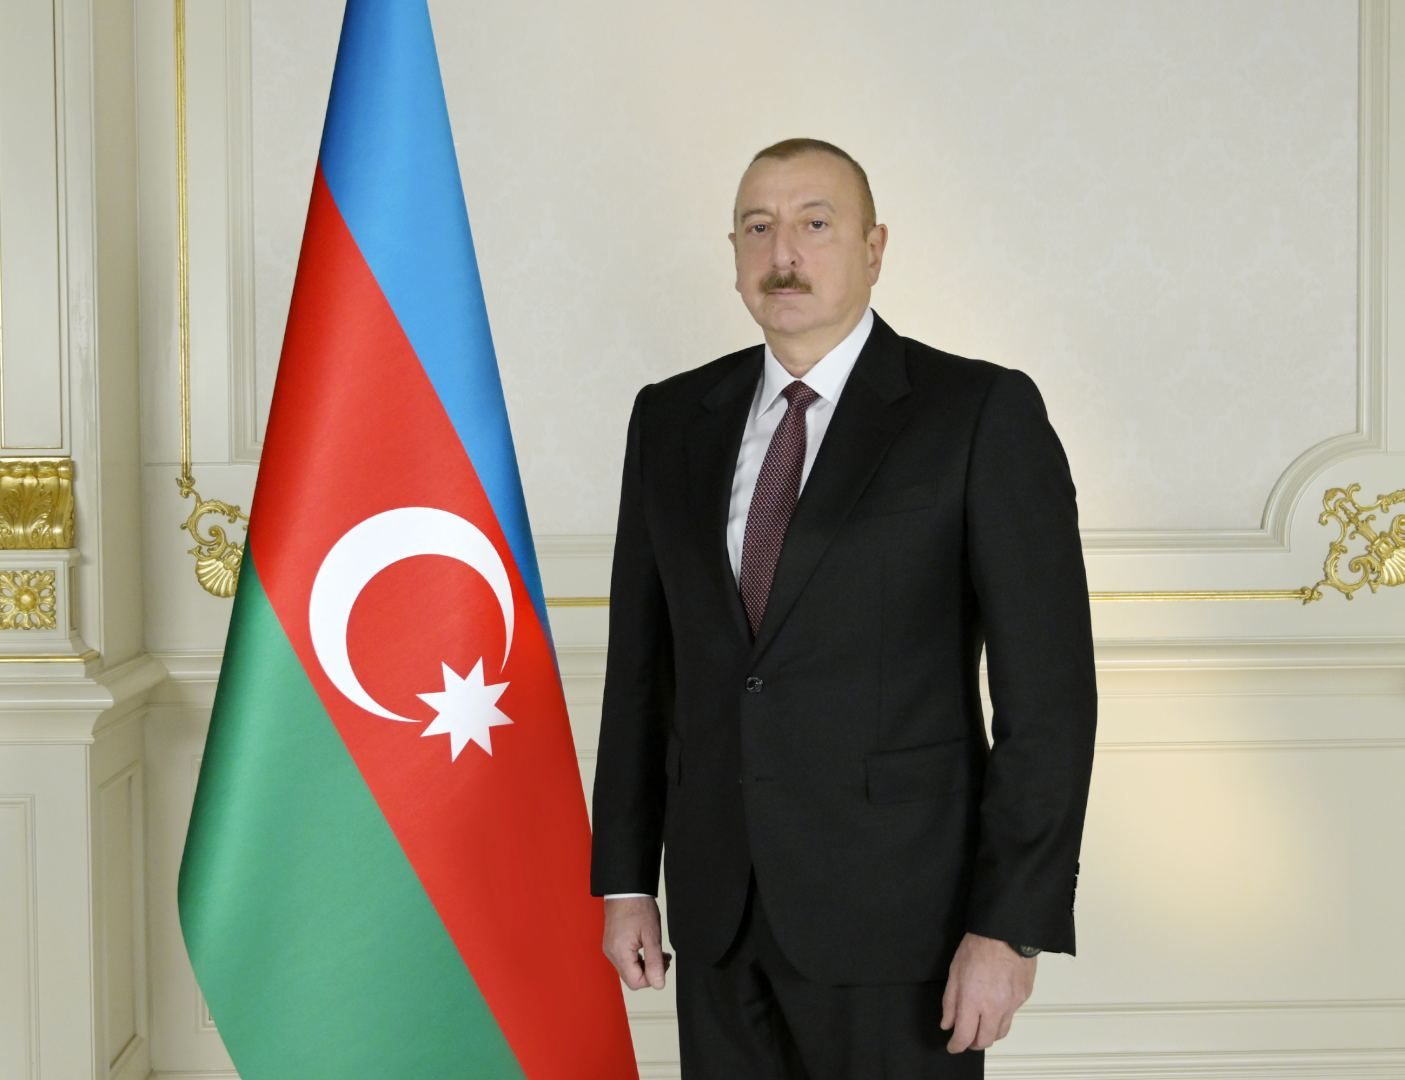 Presidents of Azerbaijan and Türkiye have joint dinner